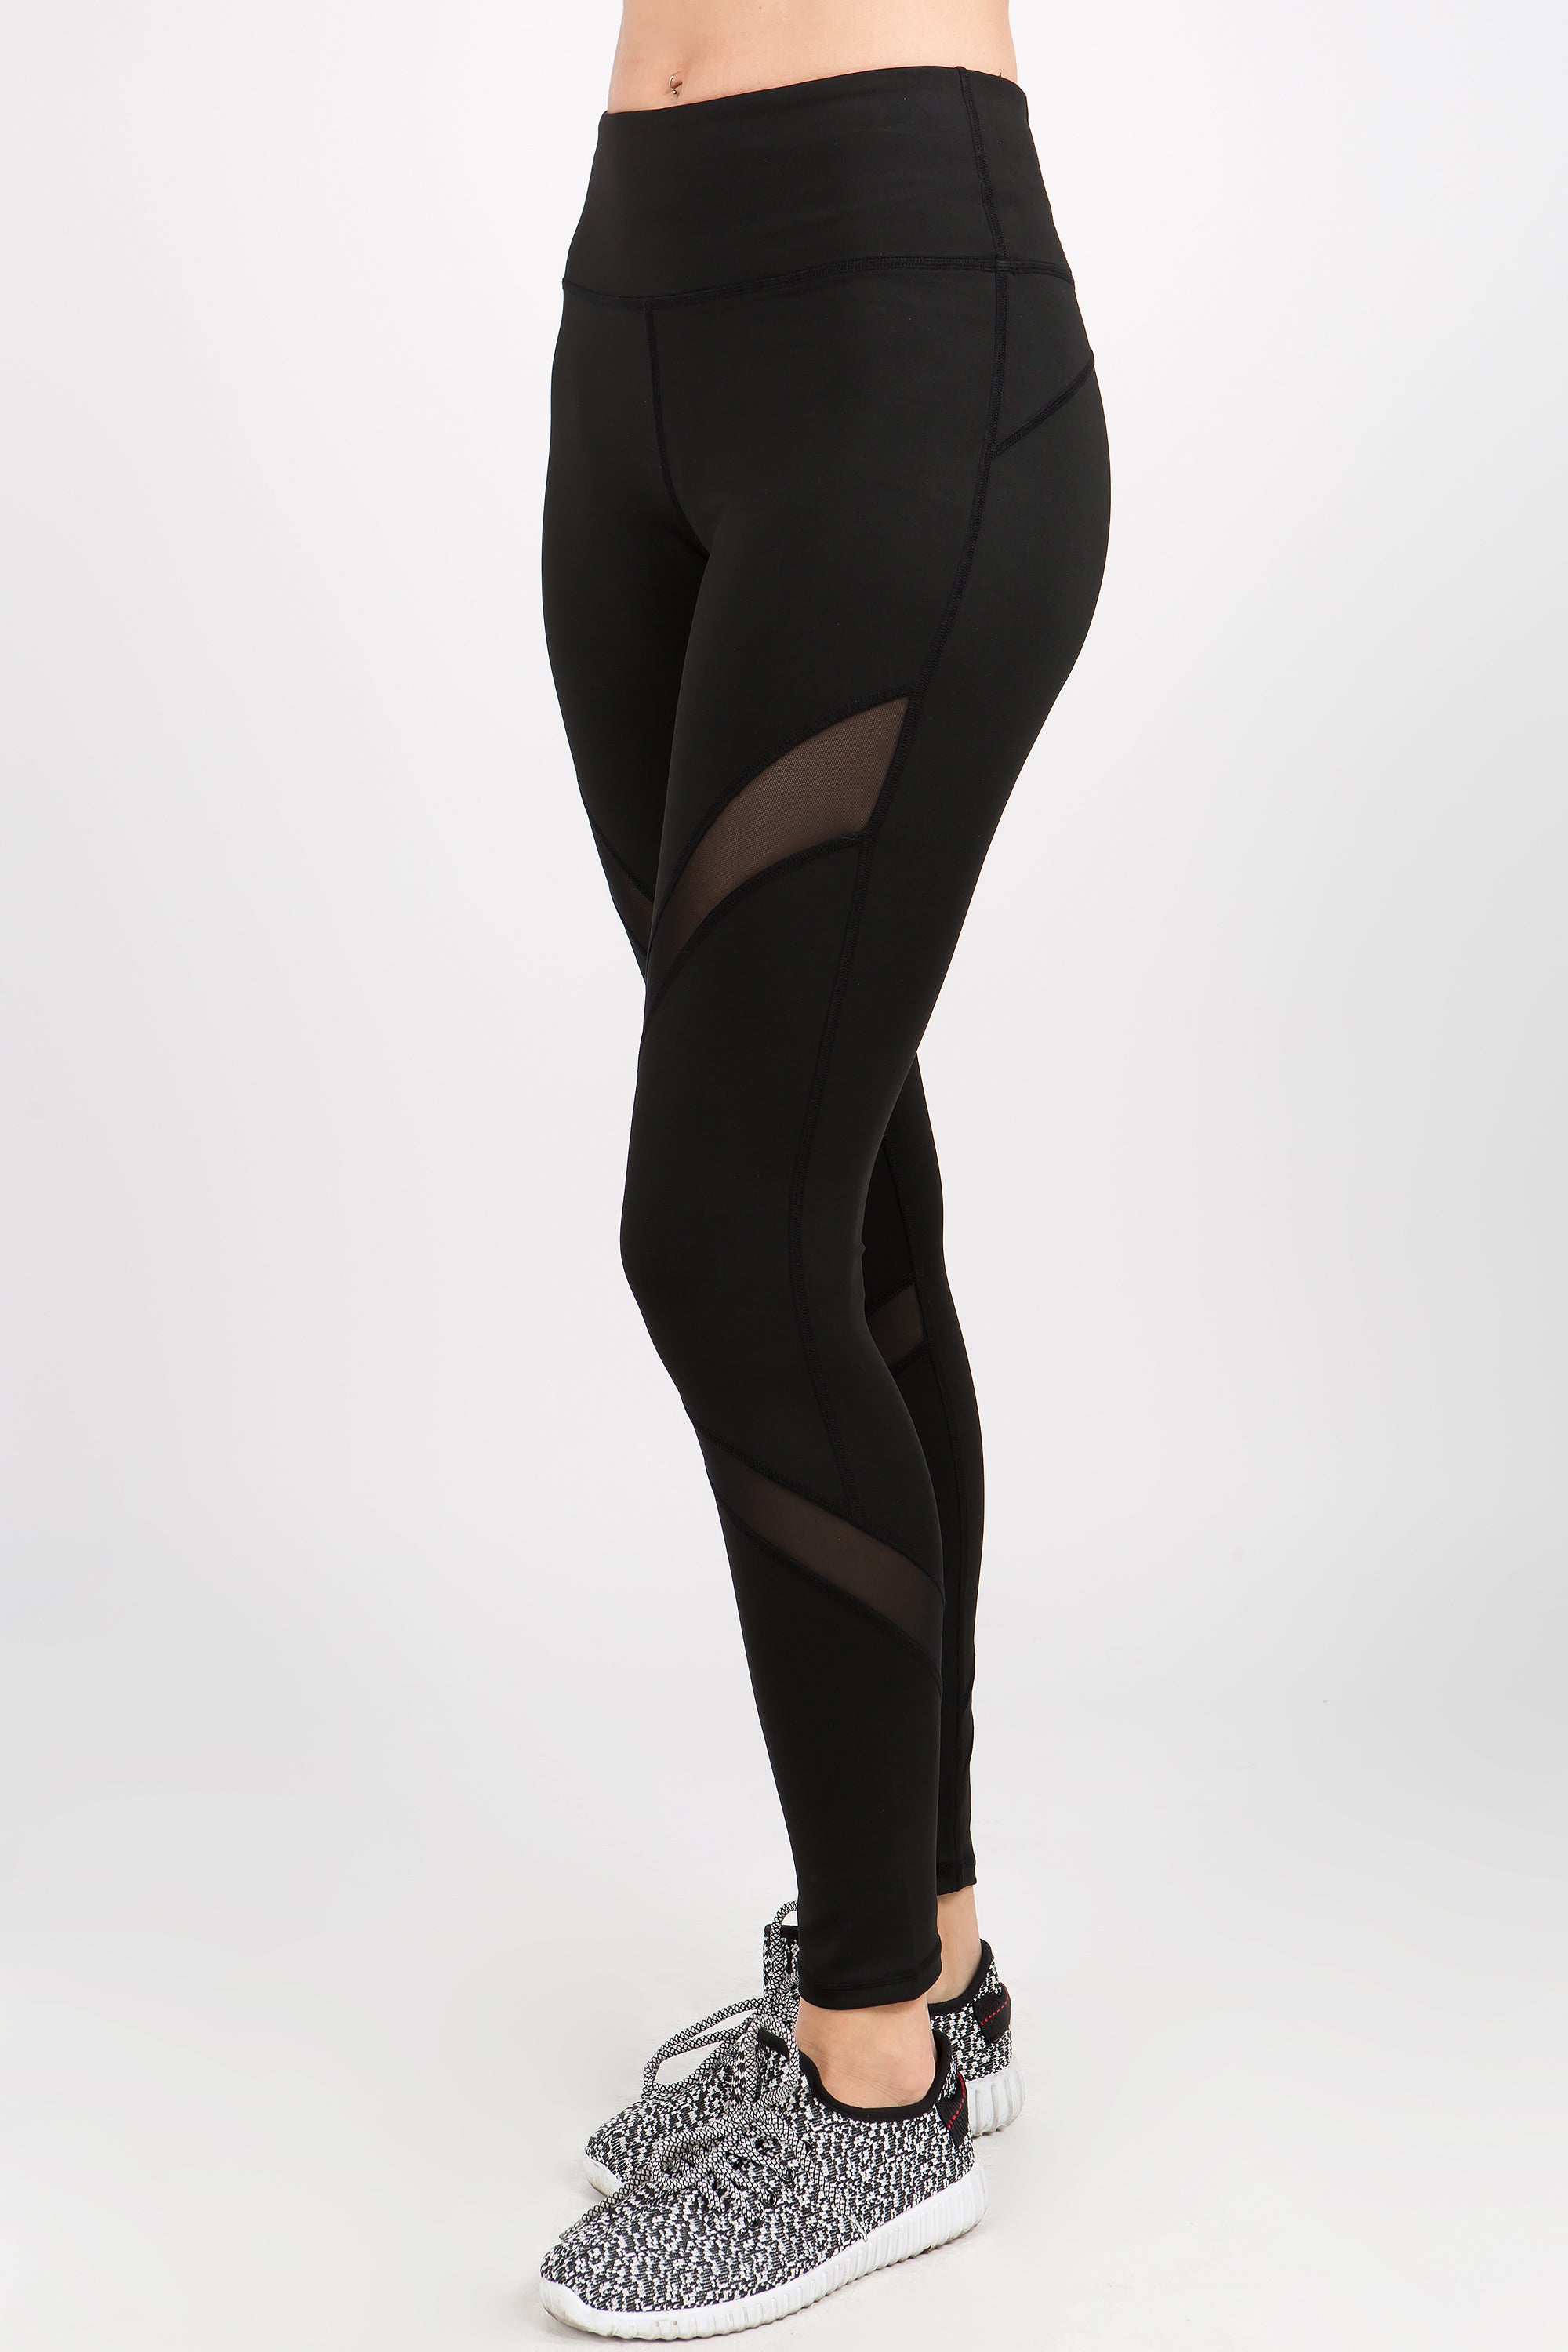 Avia - Athletic Leggings w/ Mesh Inset Workout Yoga Pants Black